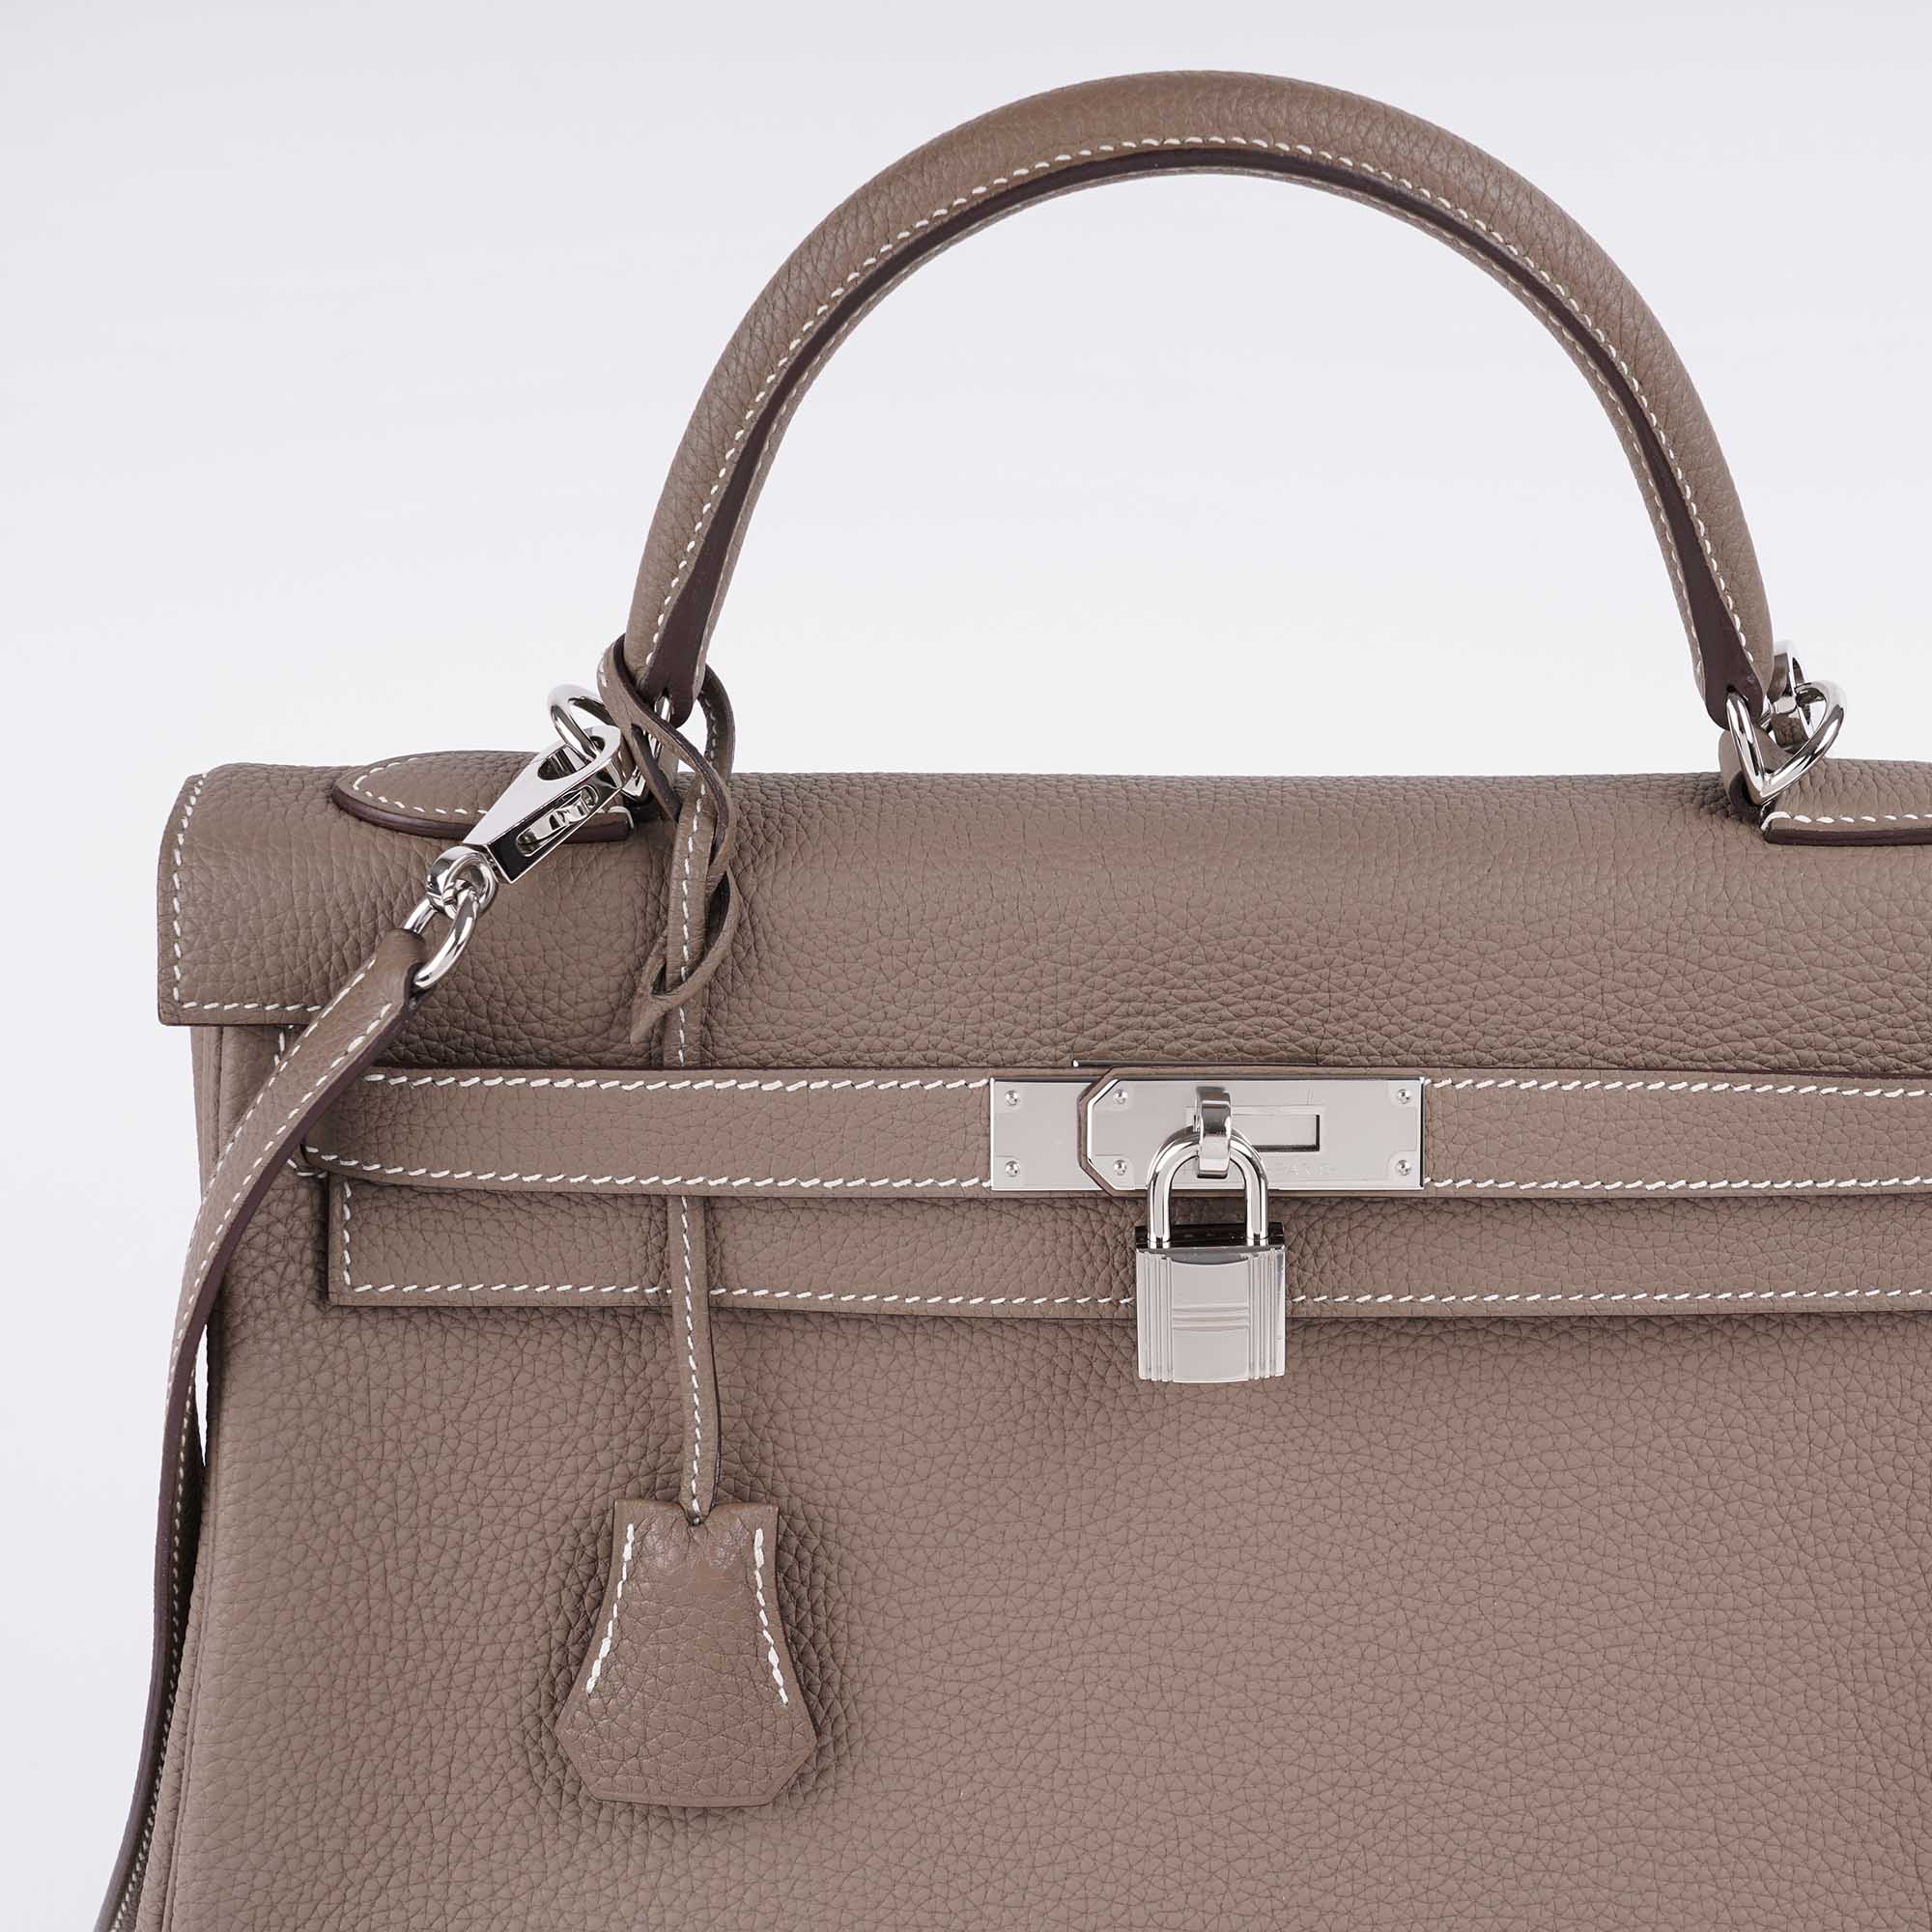 Kelly Retourne 32 Handbag - HERMÈS - Affordable Luxury image